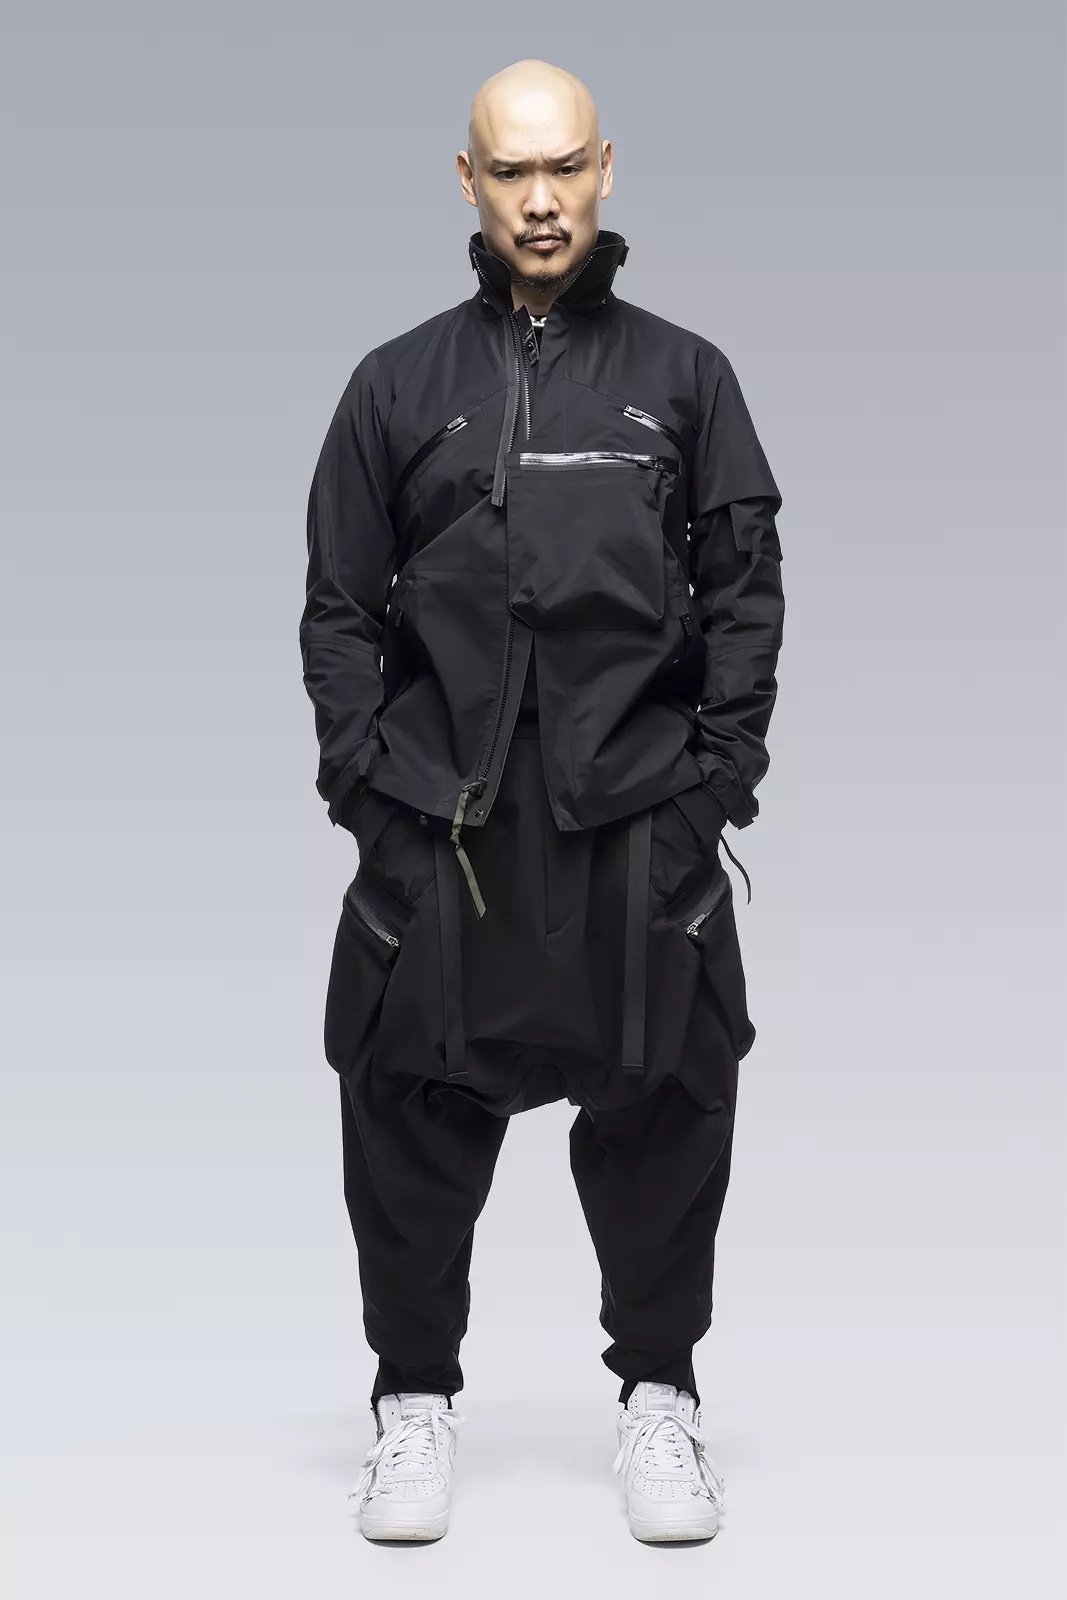 J1A-GTKR-BKS KR EX 3L Gore-Tex® Pro Interops Jacket Black with size 5 WR zippers in gloss black - 11